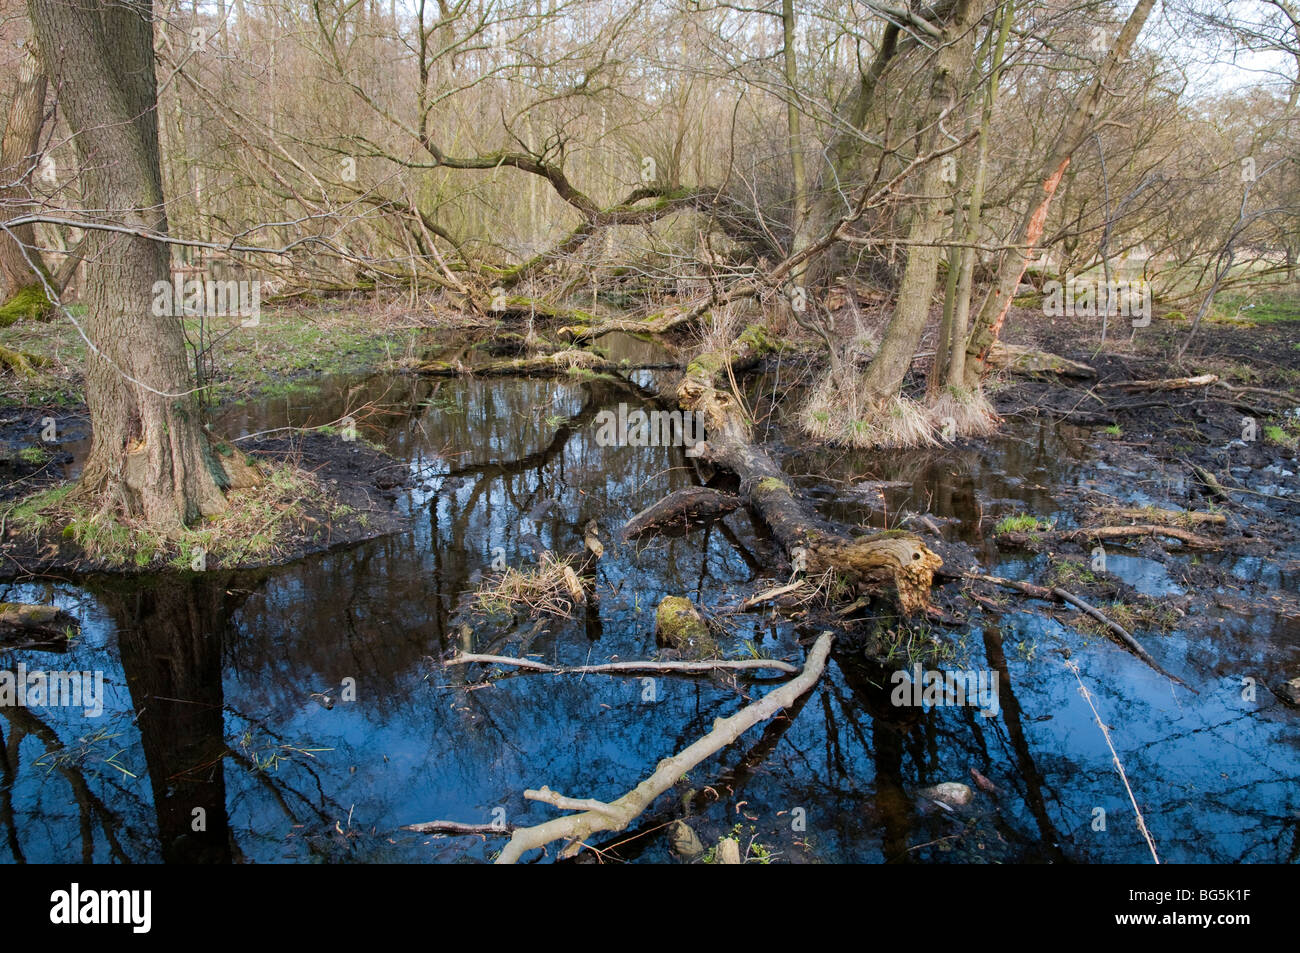 Moor, Sumpf, Bäume, Wasser, Naturschutzgebiet Halbinsel Gnitz, Insel Usedom, Mecklenburg-Vorpommern, Allemagne Allemagne | nature reser Banque D'Images